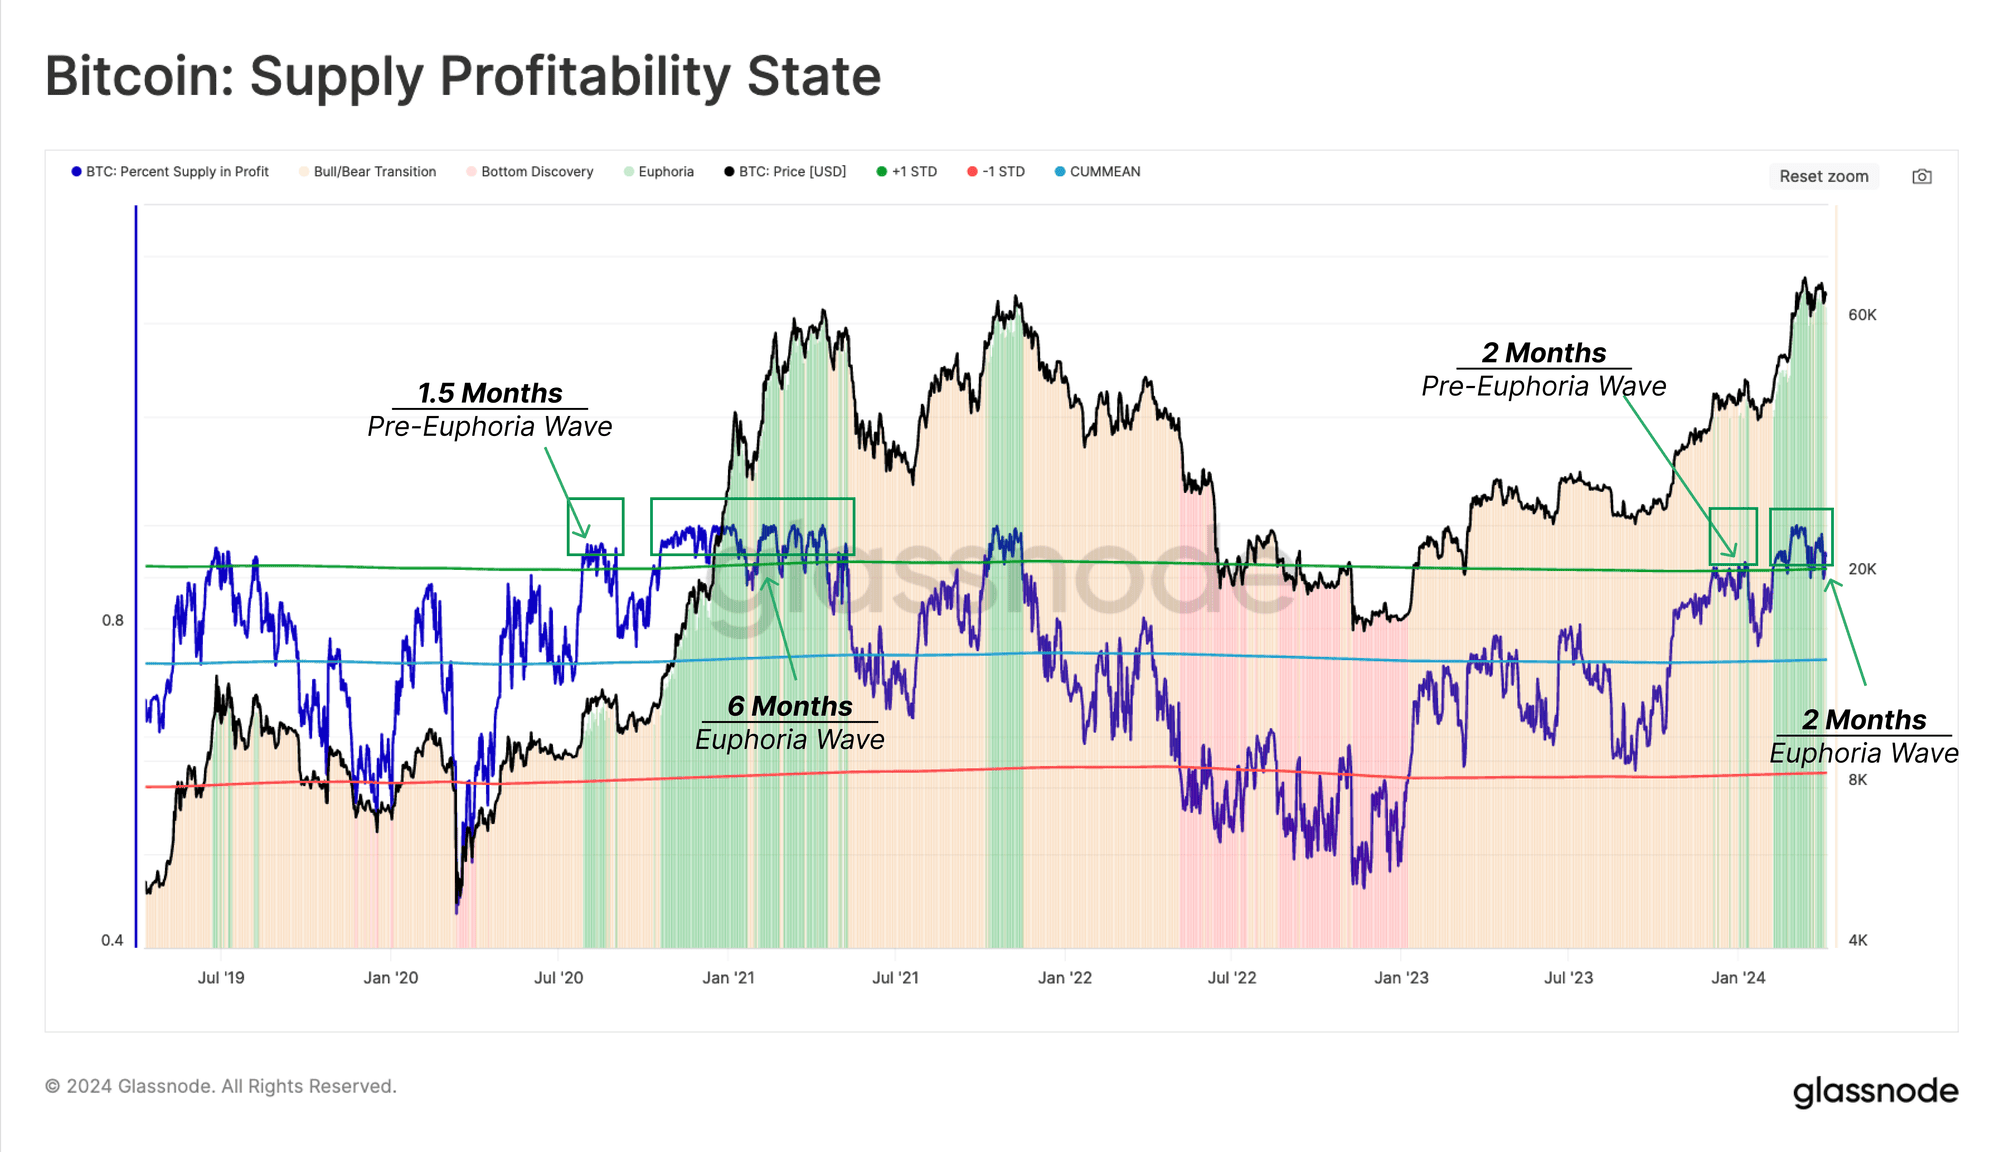 Supply Profitability State